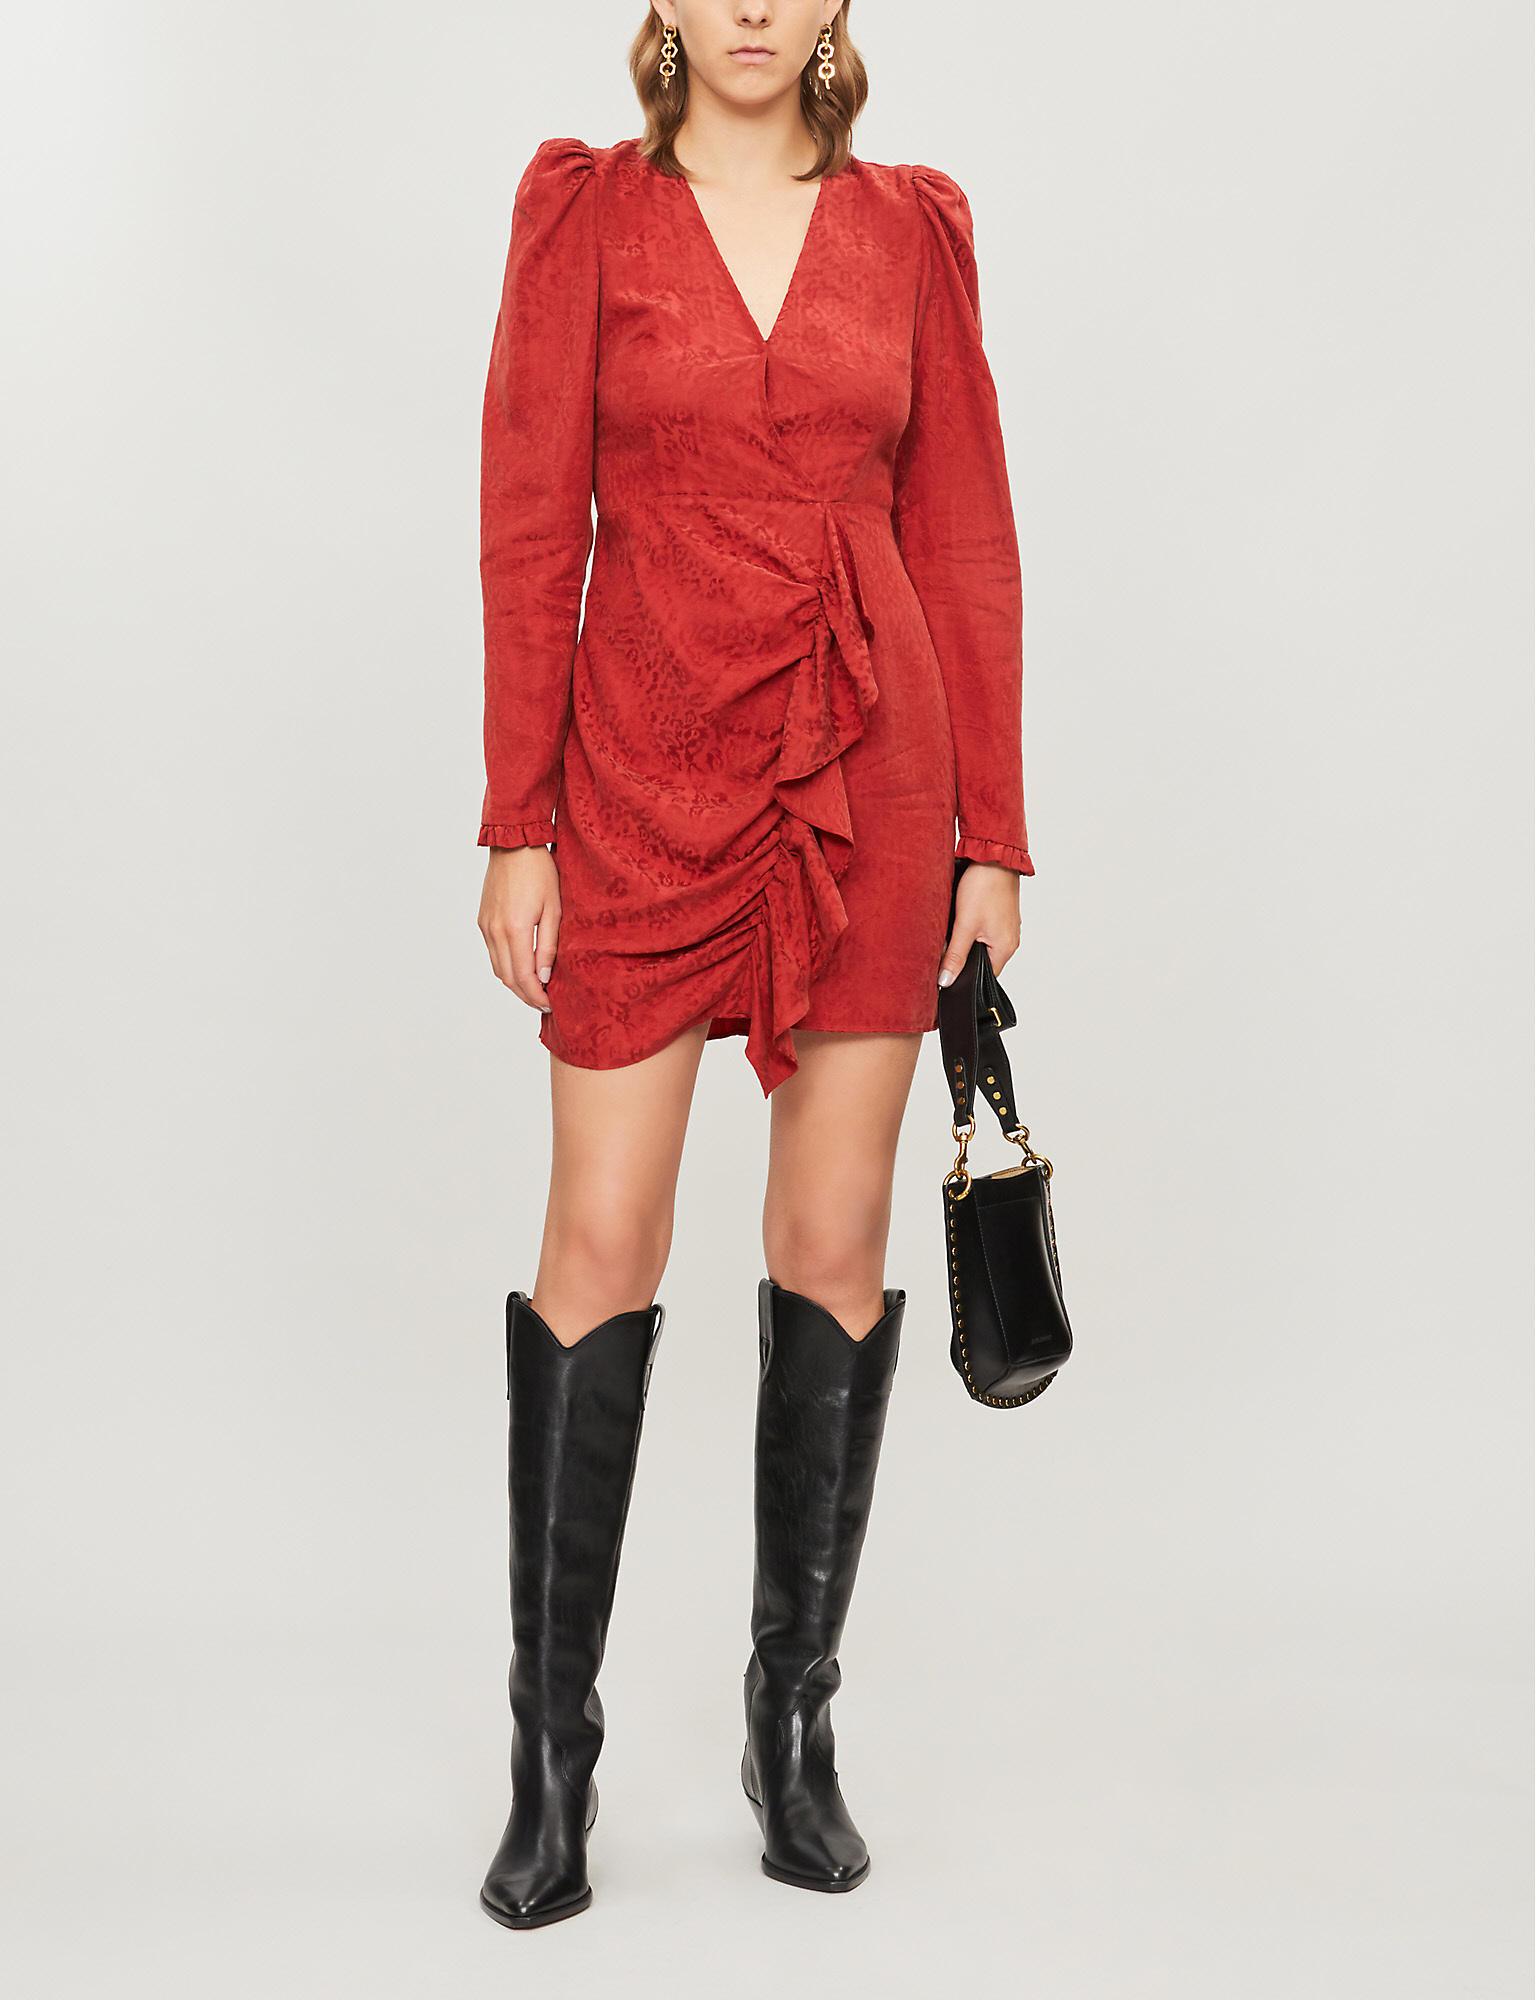 Designers Remix Ruben Jacquard Crepe Mini Dress in Red - Lyst